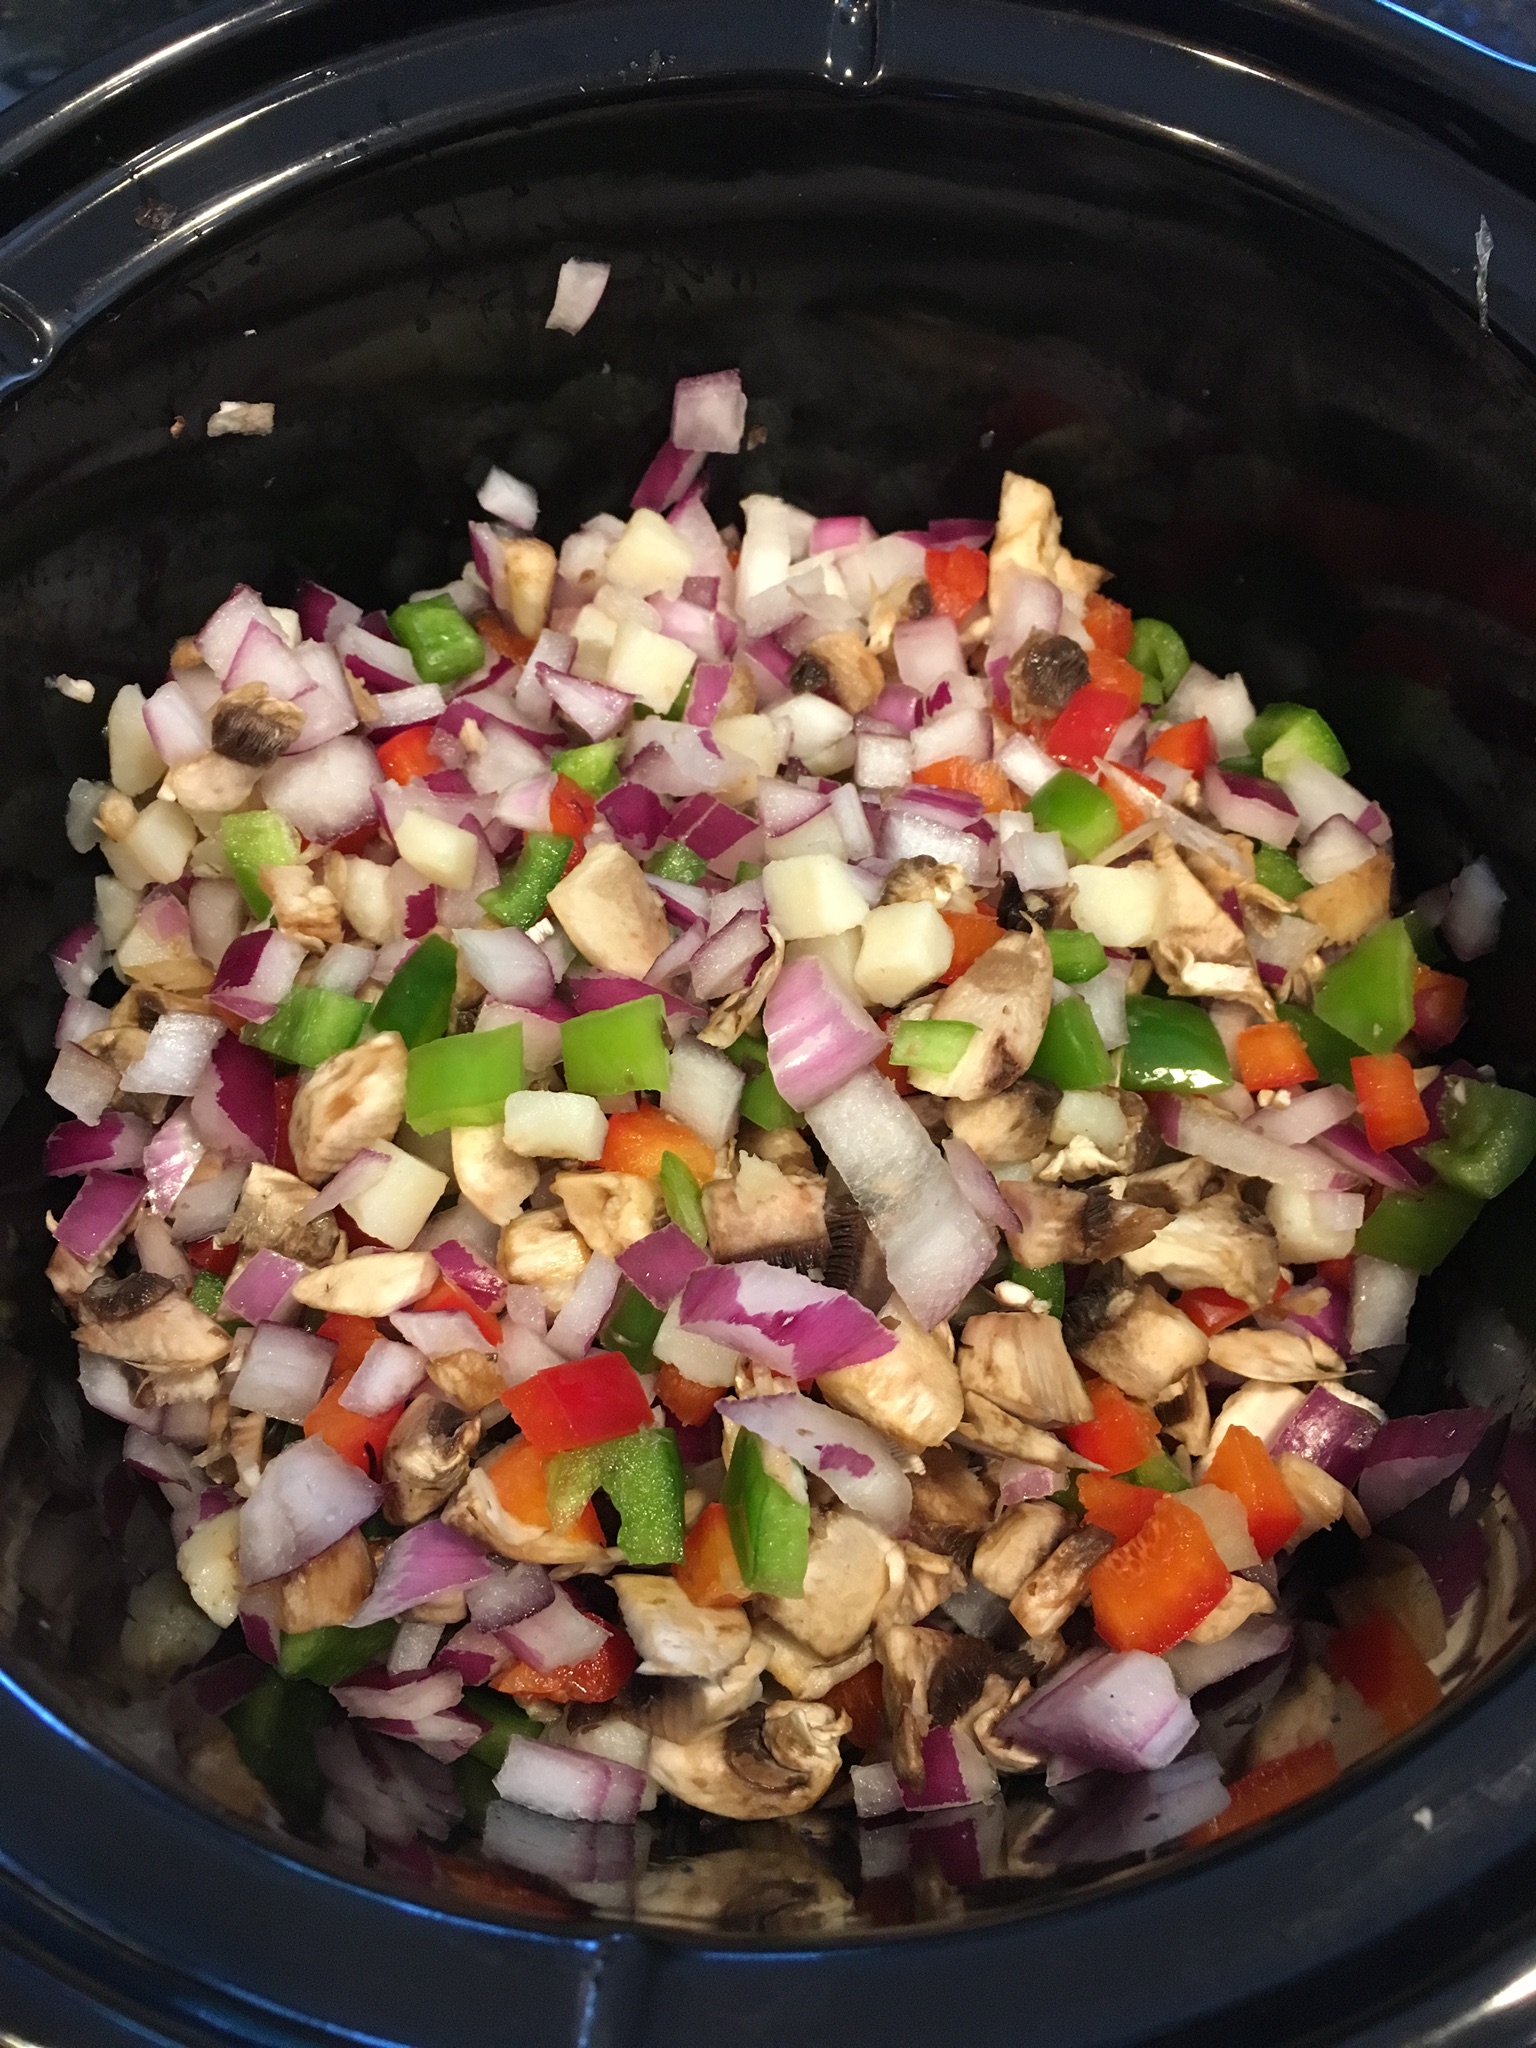 Slow Cooker Chicken Lettuce Wraps